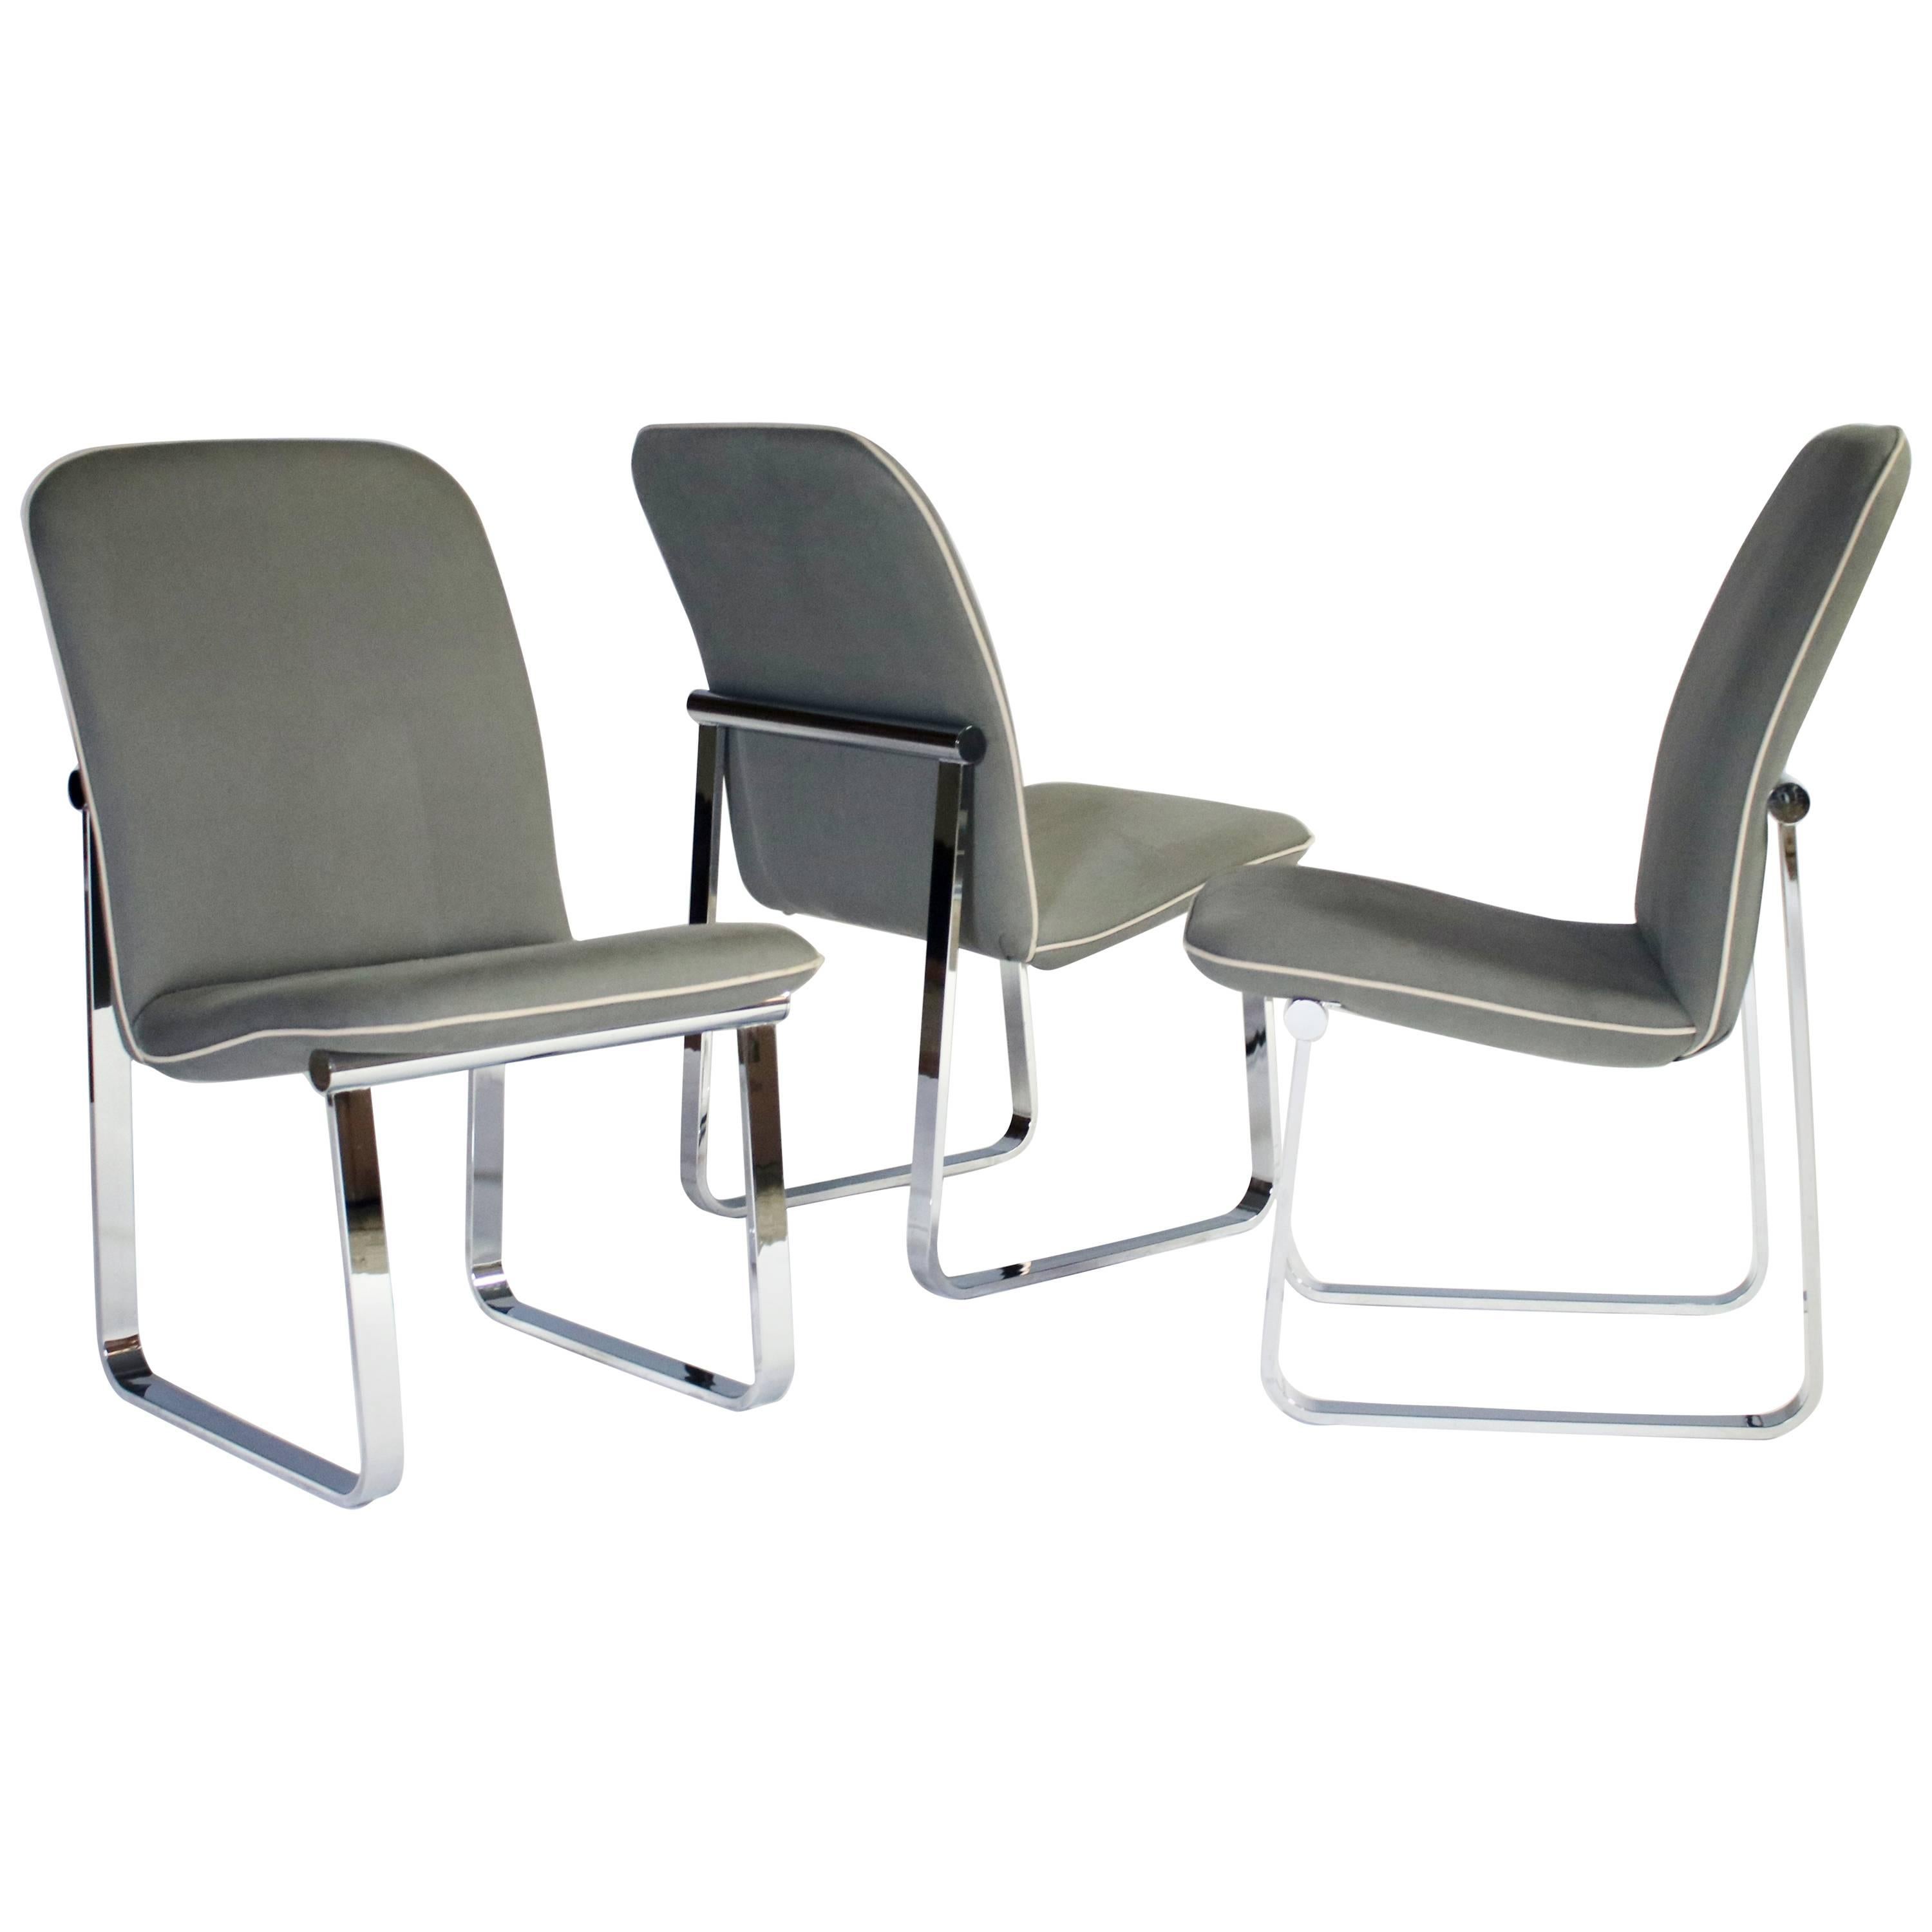 Design Institute of America Dining Chairs, Set of Three